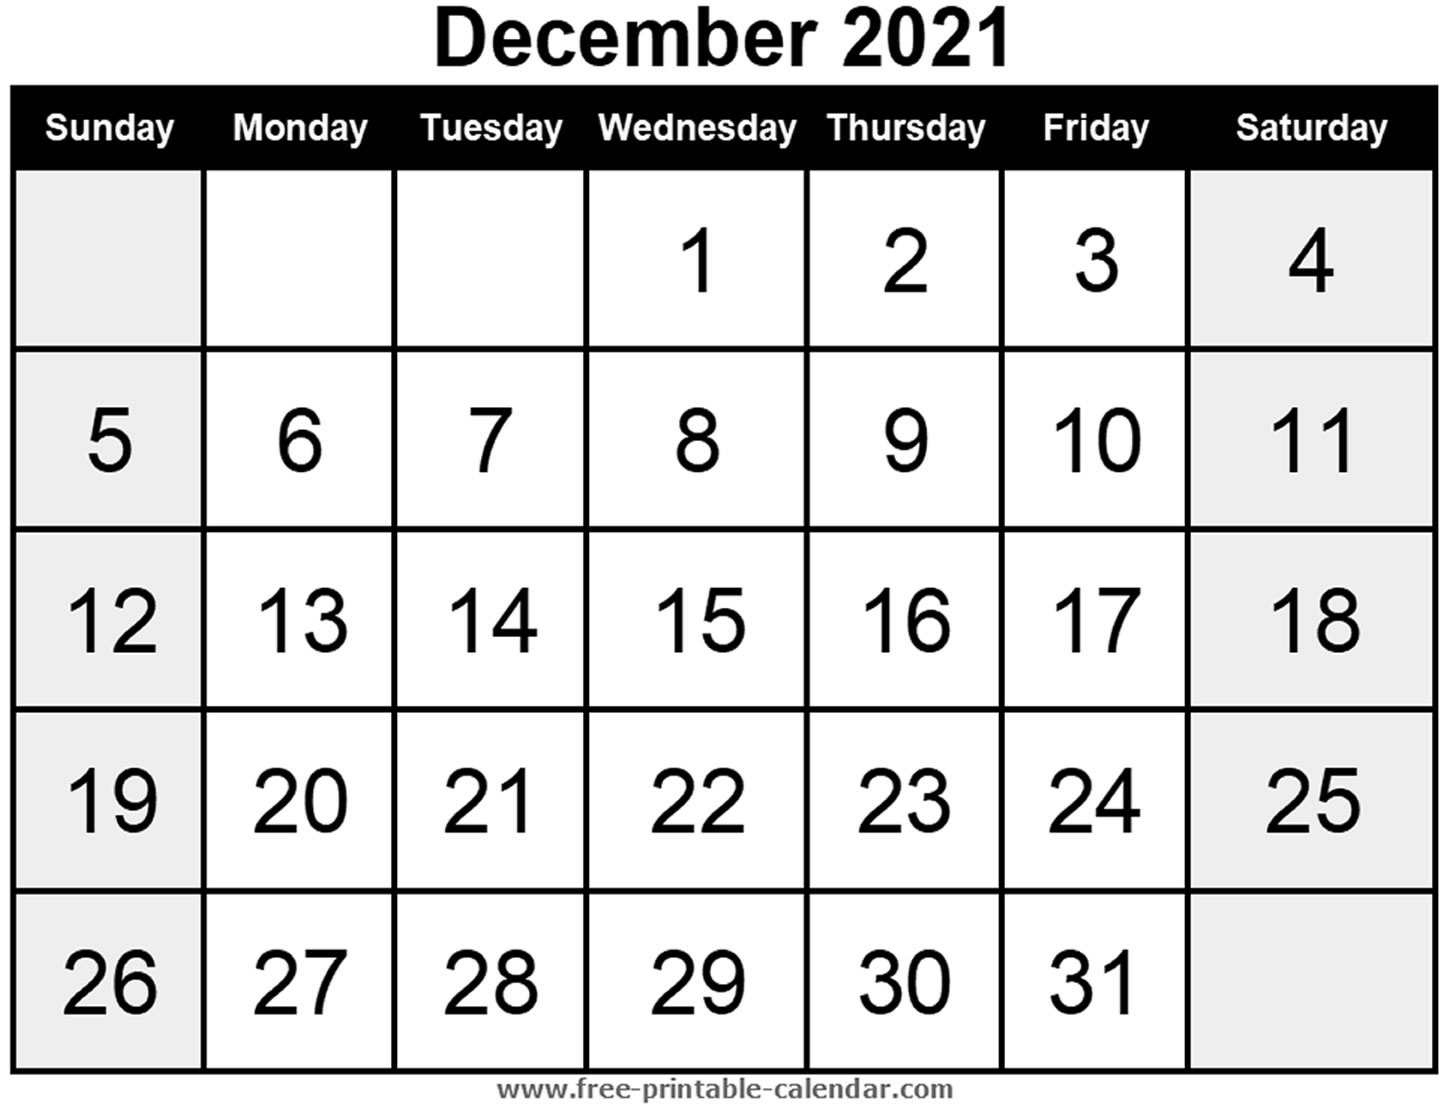 Blank Calendar December 2021 - Free-Printable-Calendar December 2021 Blank Calendar